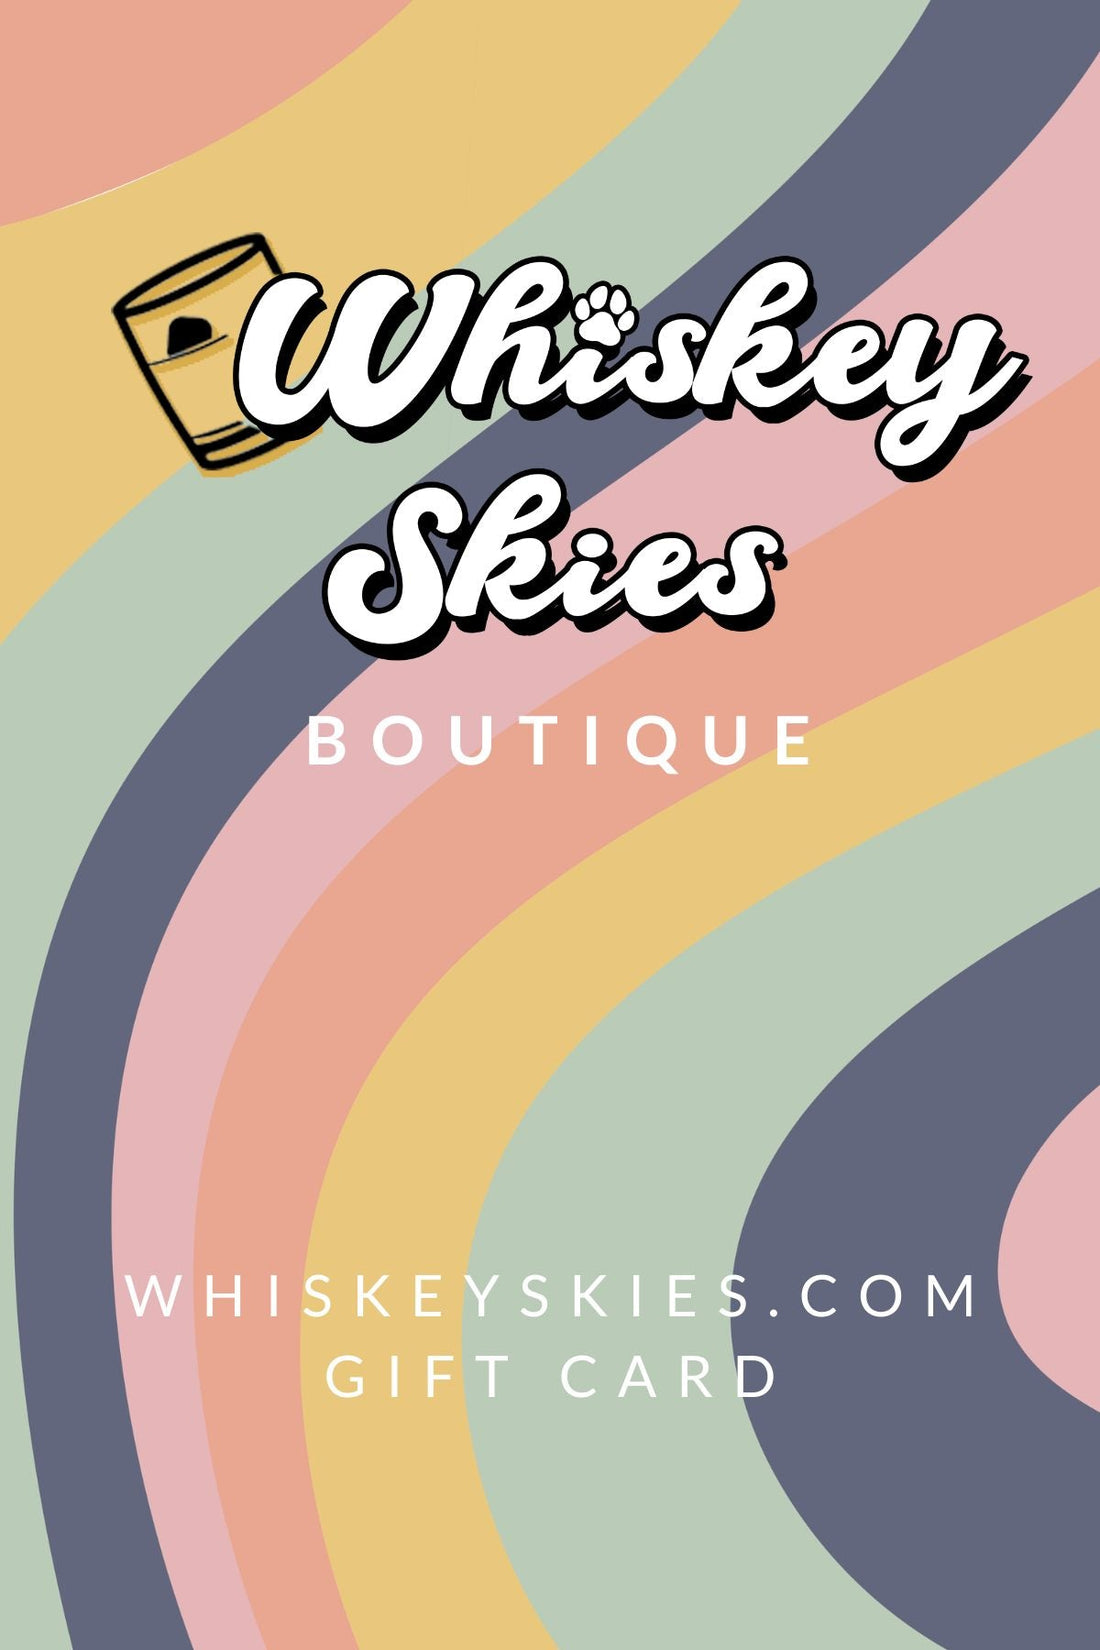 Whiskey Skies Gift Card! - Whiskey Skies